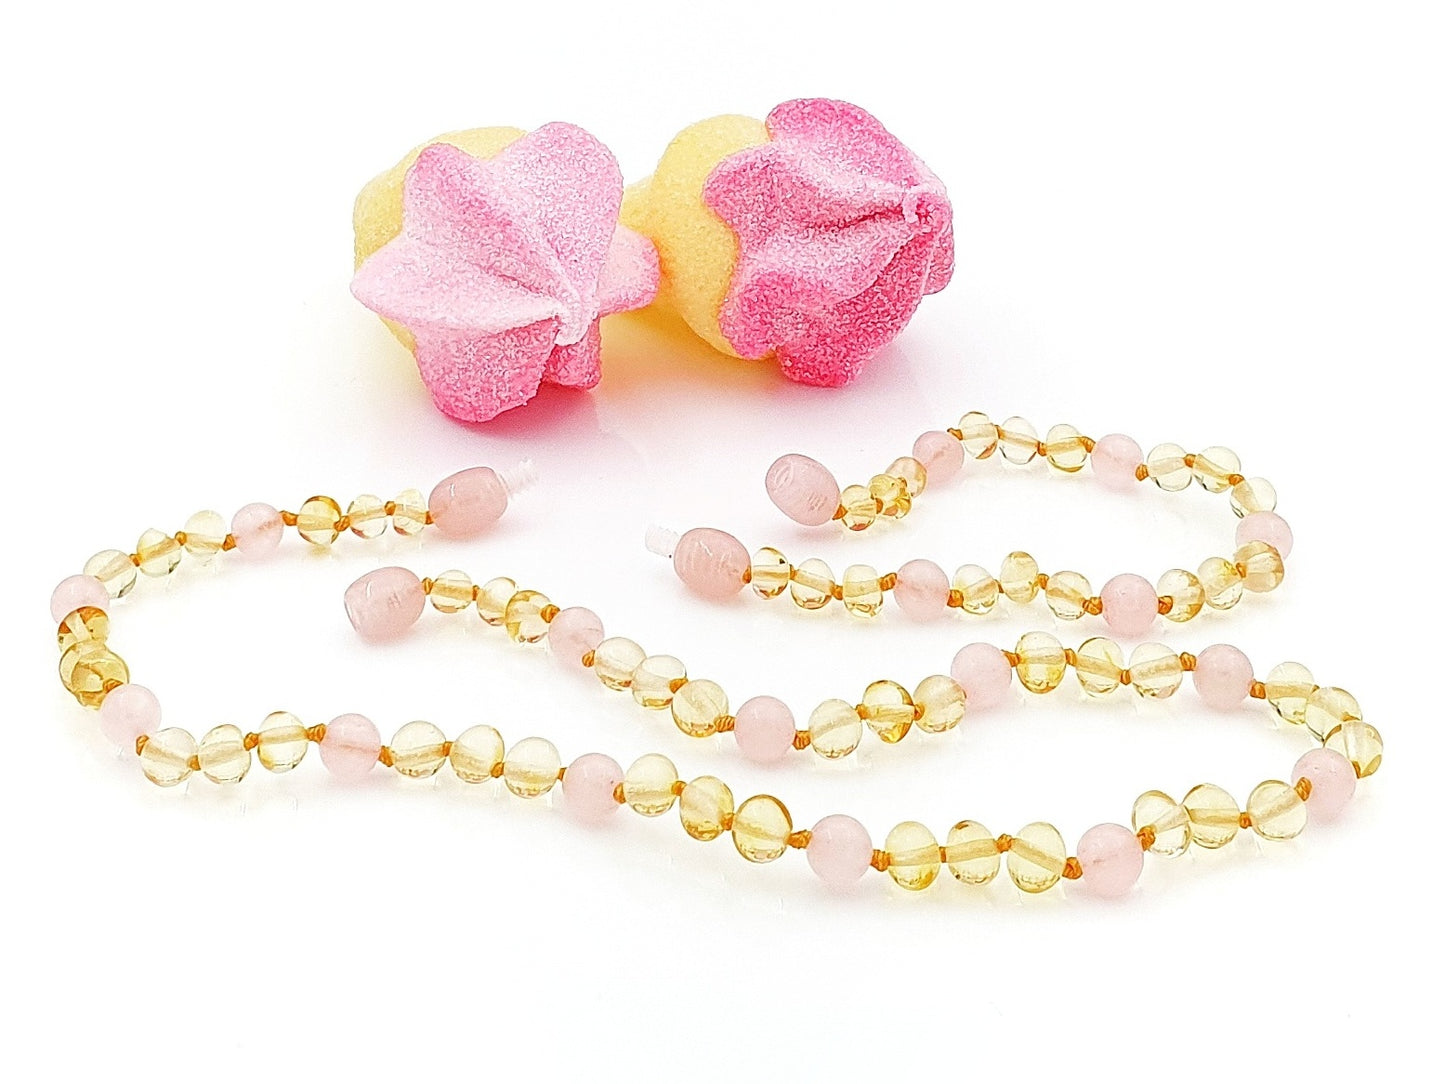 natural Baltic amber baby beads